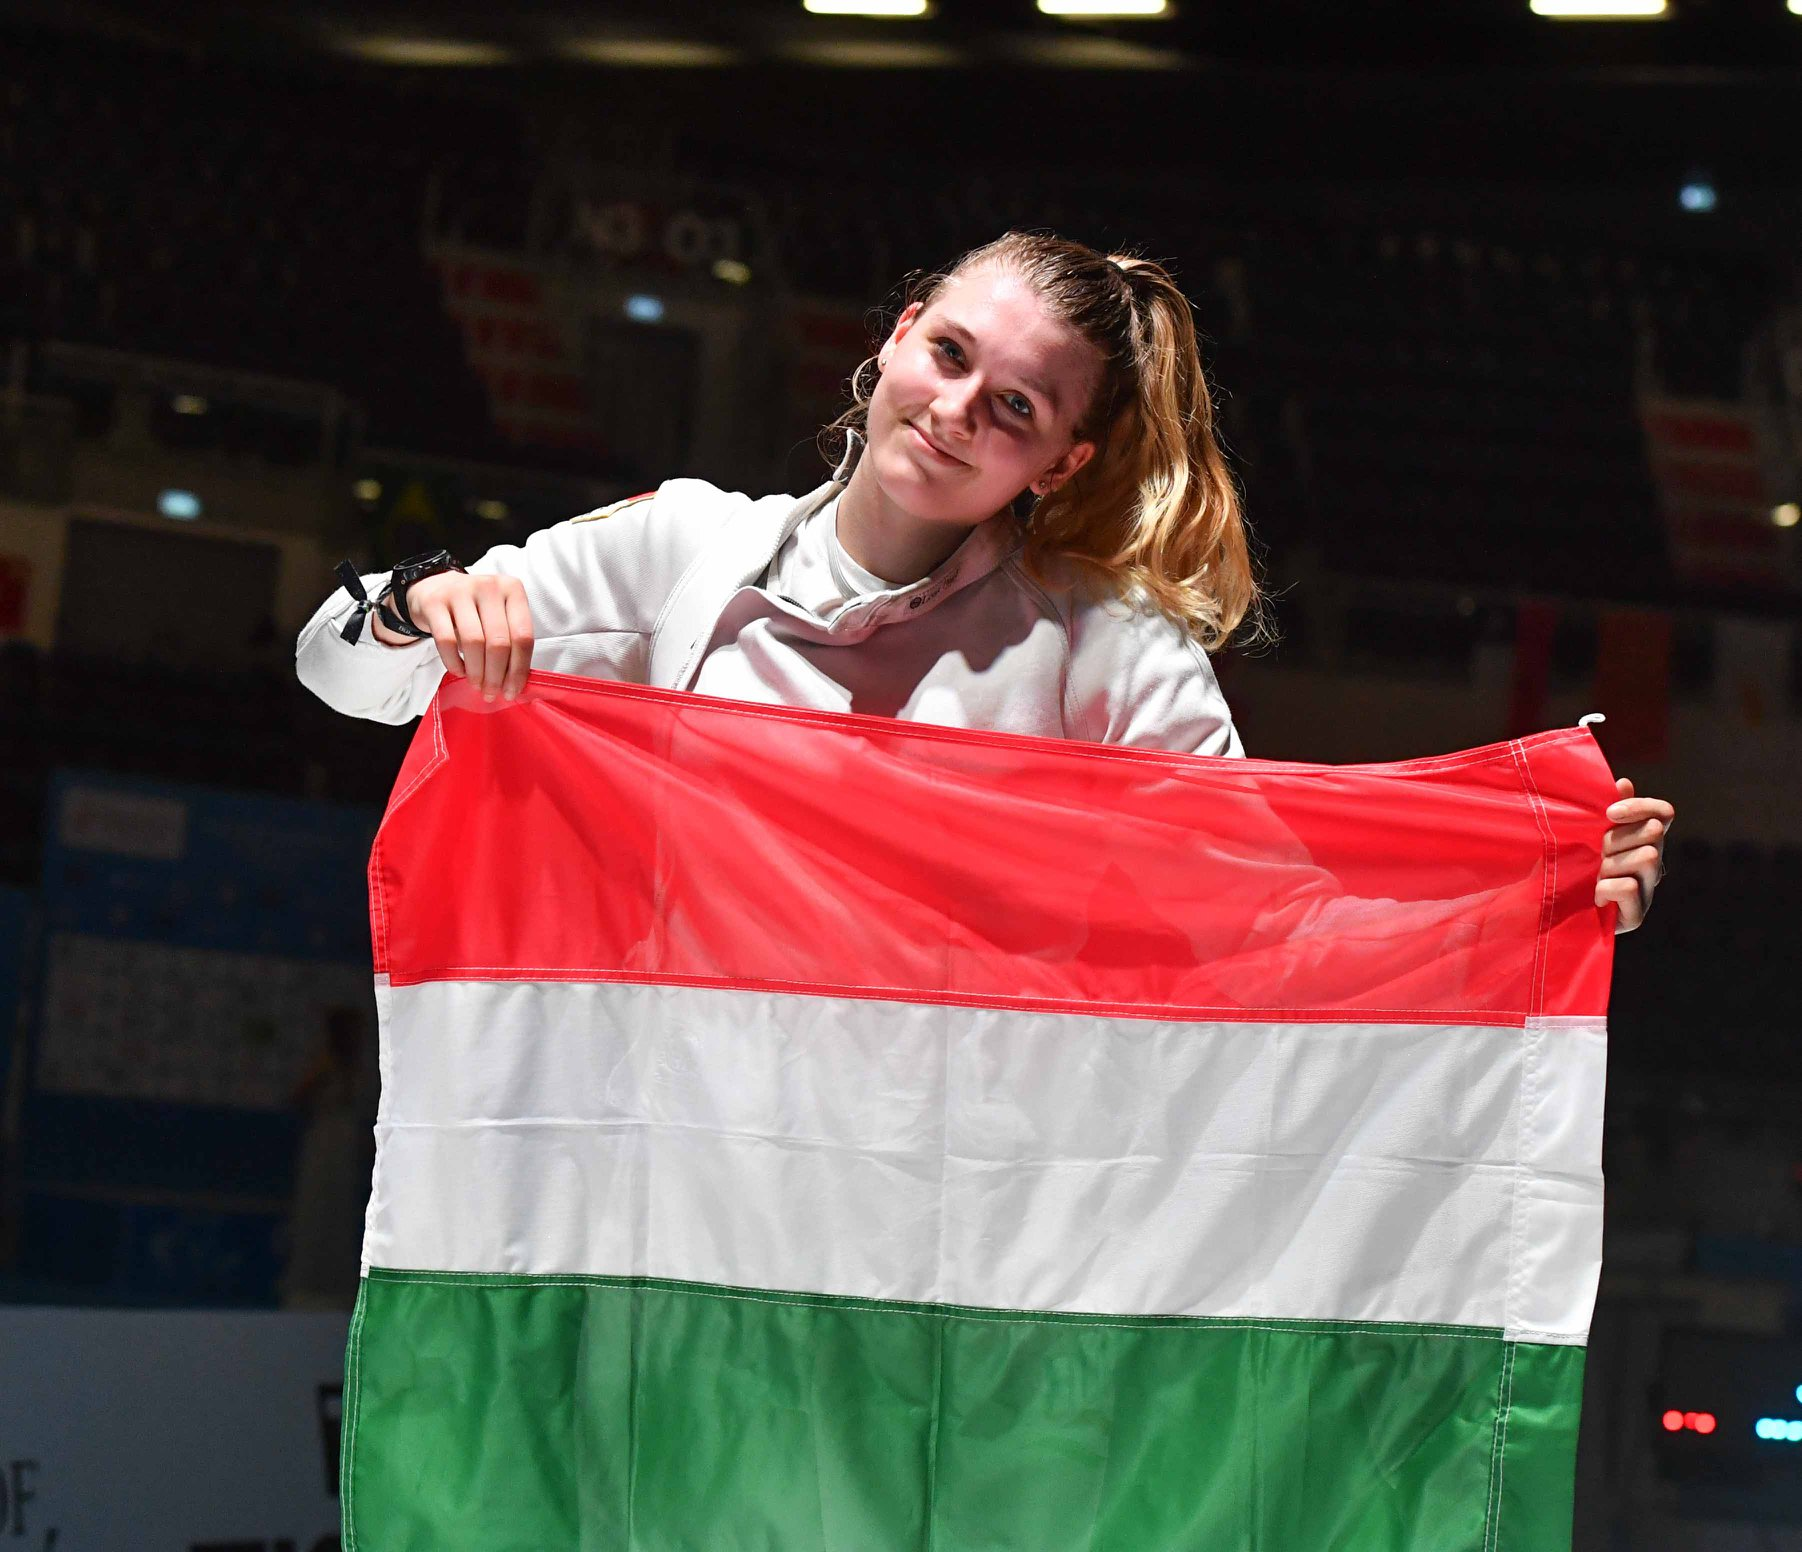 Hungary’s Eszter Muhari won the women's cadet épée title ©FIE